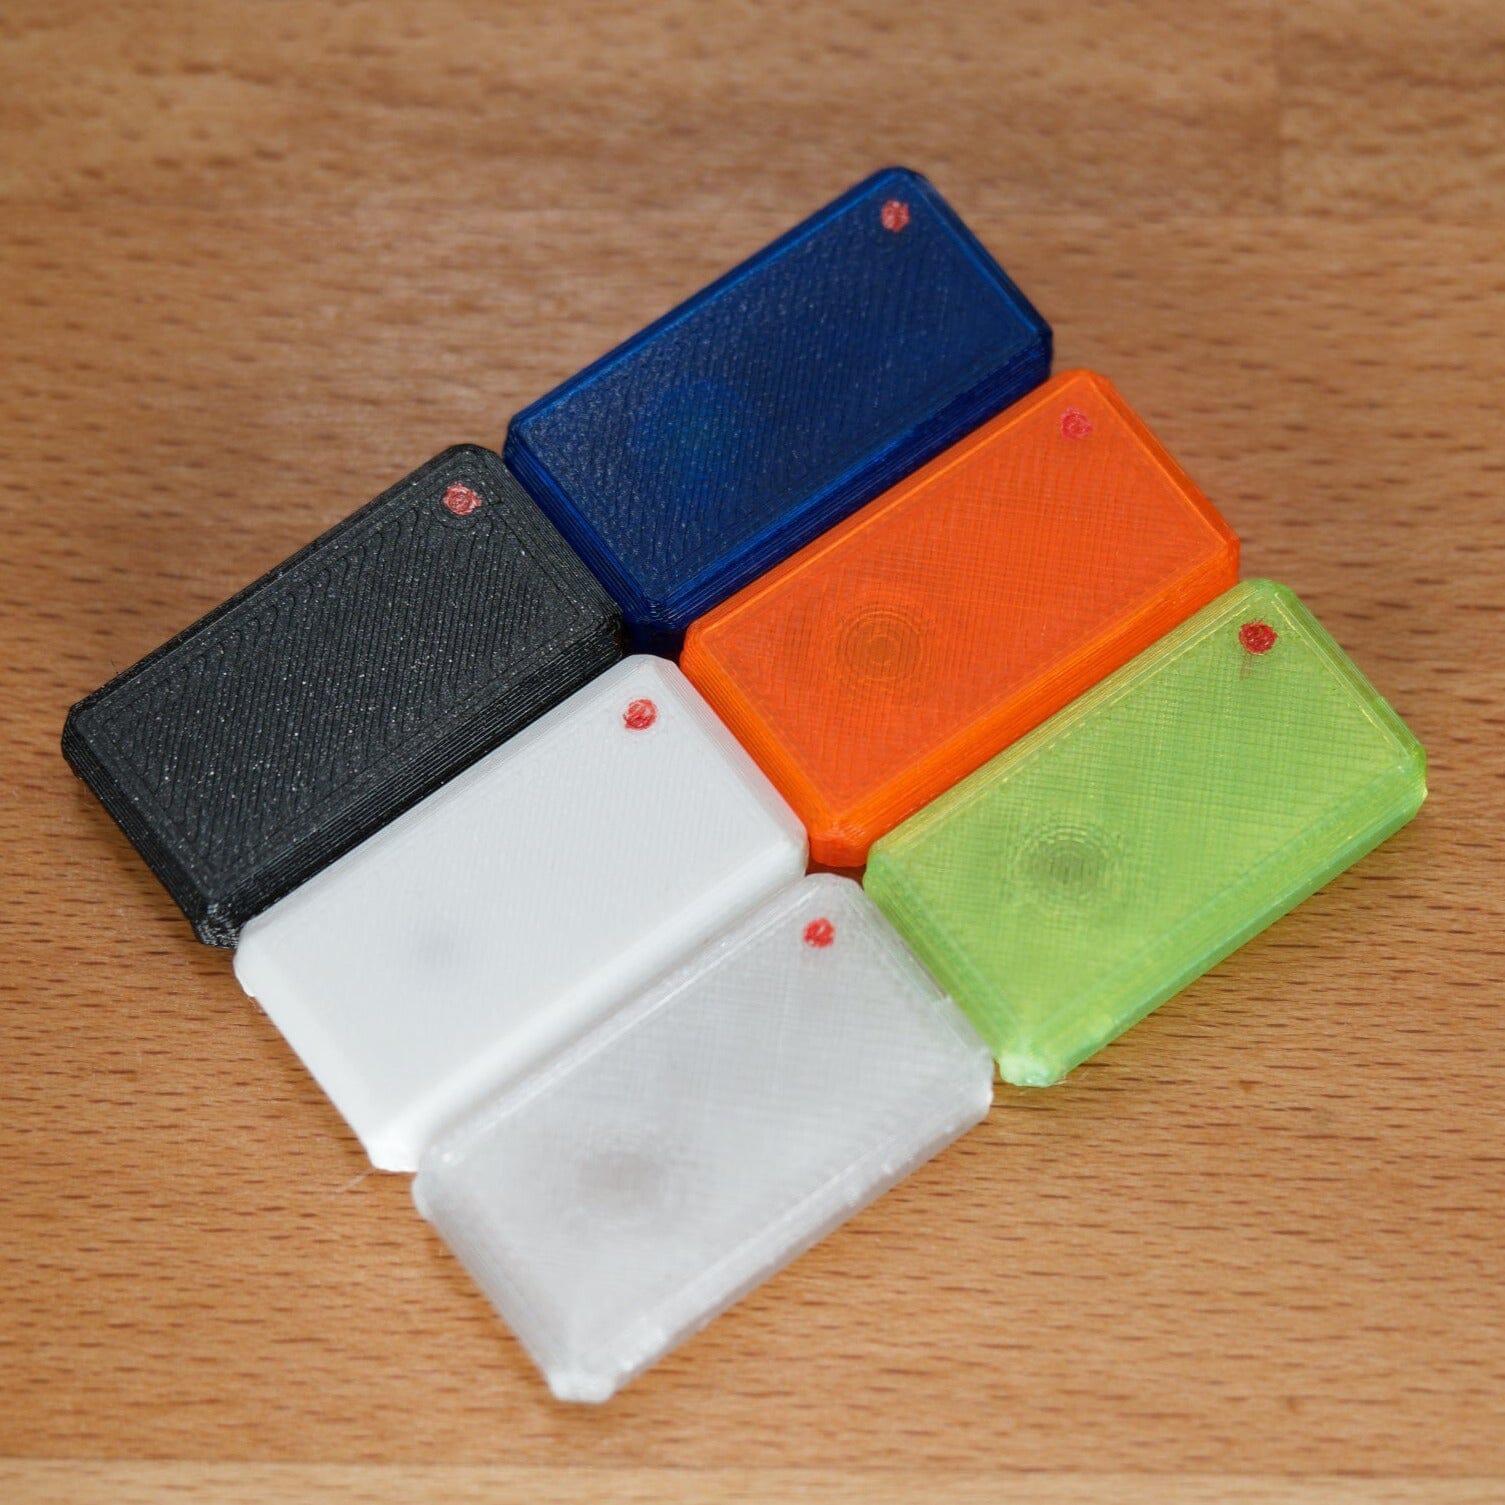 USB Nova cases in 6 different colors. Blue, black, white, orange, transparent, green.